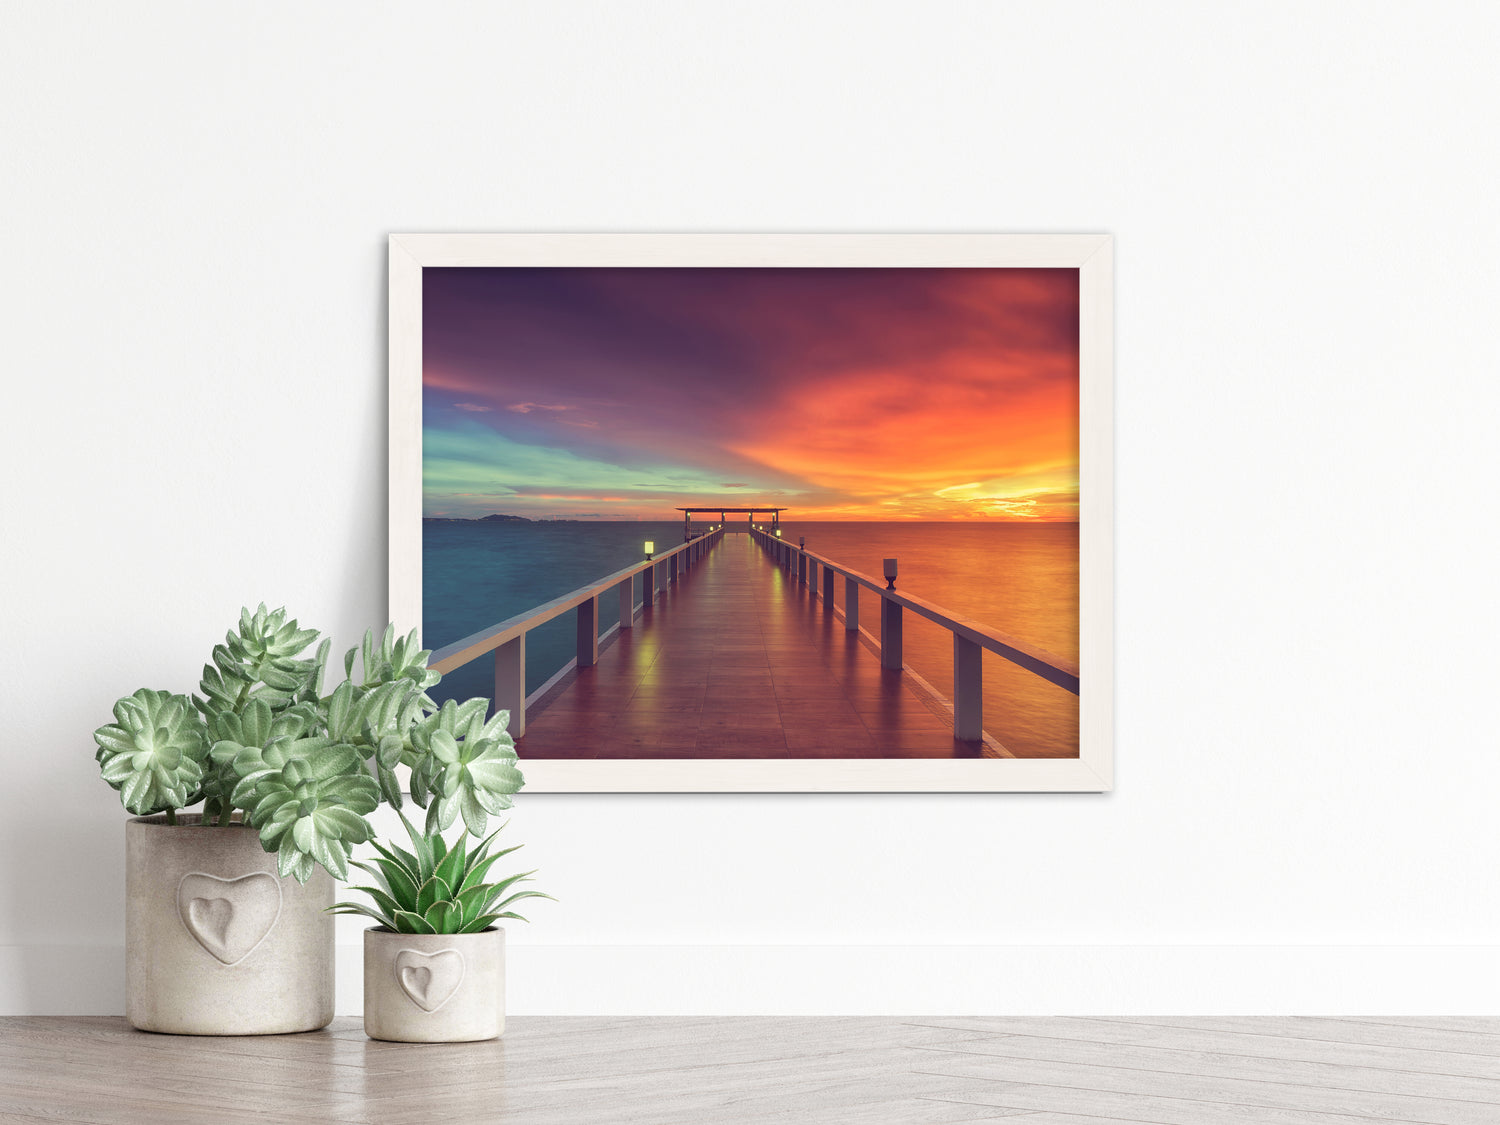 Framed Coastal Wall Art: Surreal Wooden Pier At Sunset with Intrigued Effect - Coastal / Seascape / Nature / Landscape Photo Framed Artwork - Wall Decor